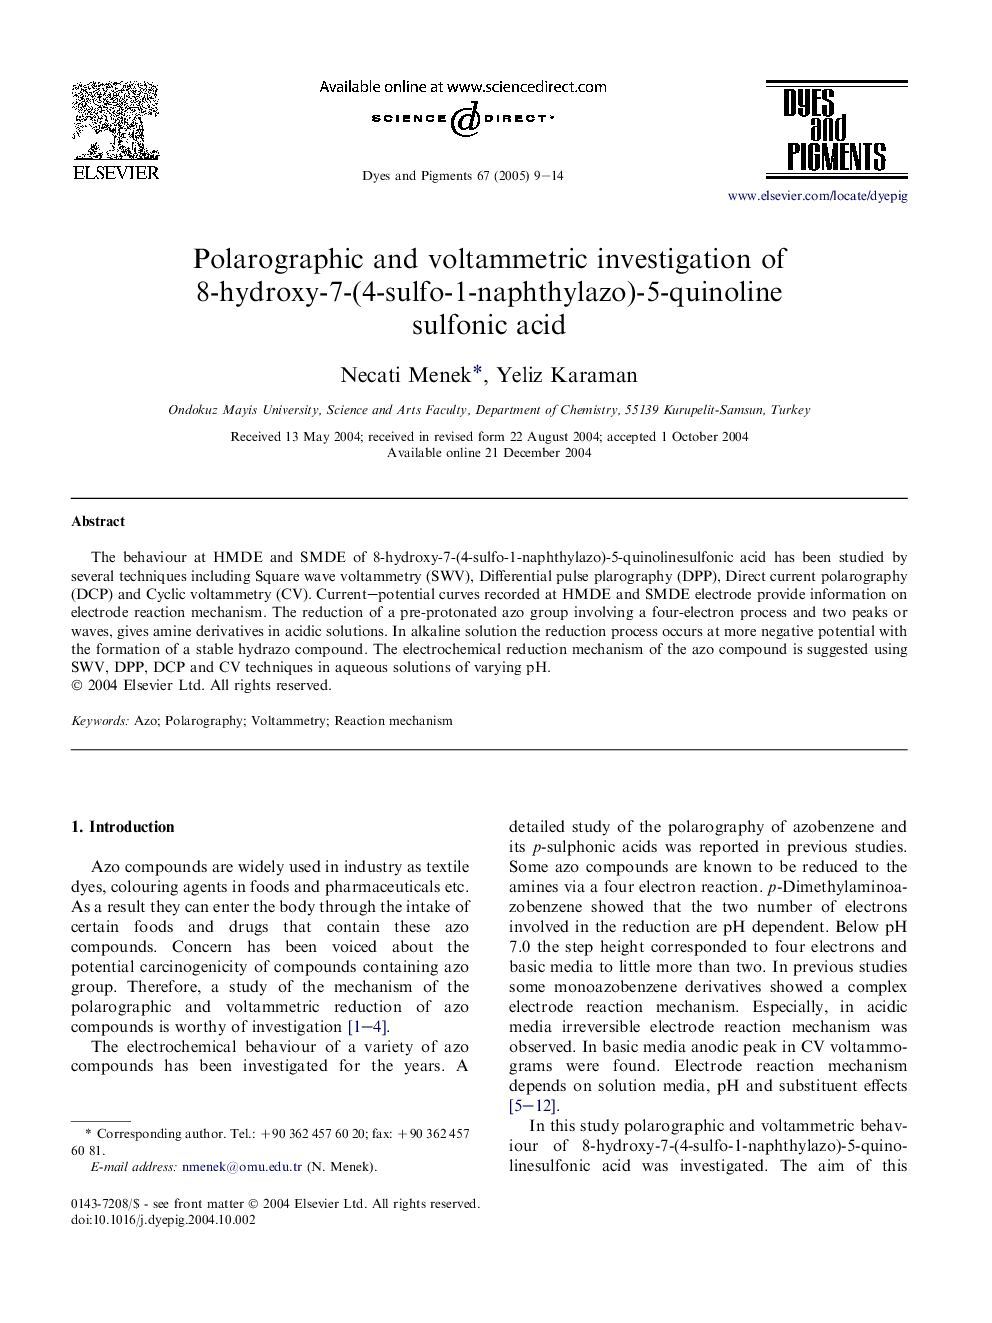 Polarographic and voltammetric investigation of 8-hydroxy-7-(4-sulfo-1-naphthylazo)-5-quinoline sulfonic acid